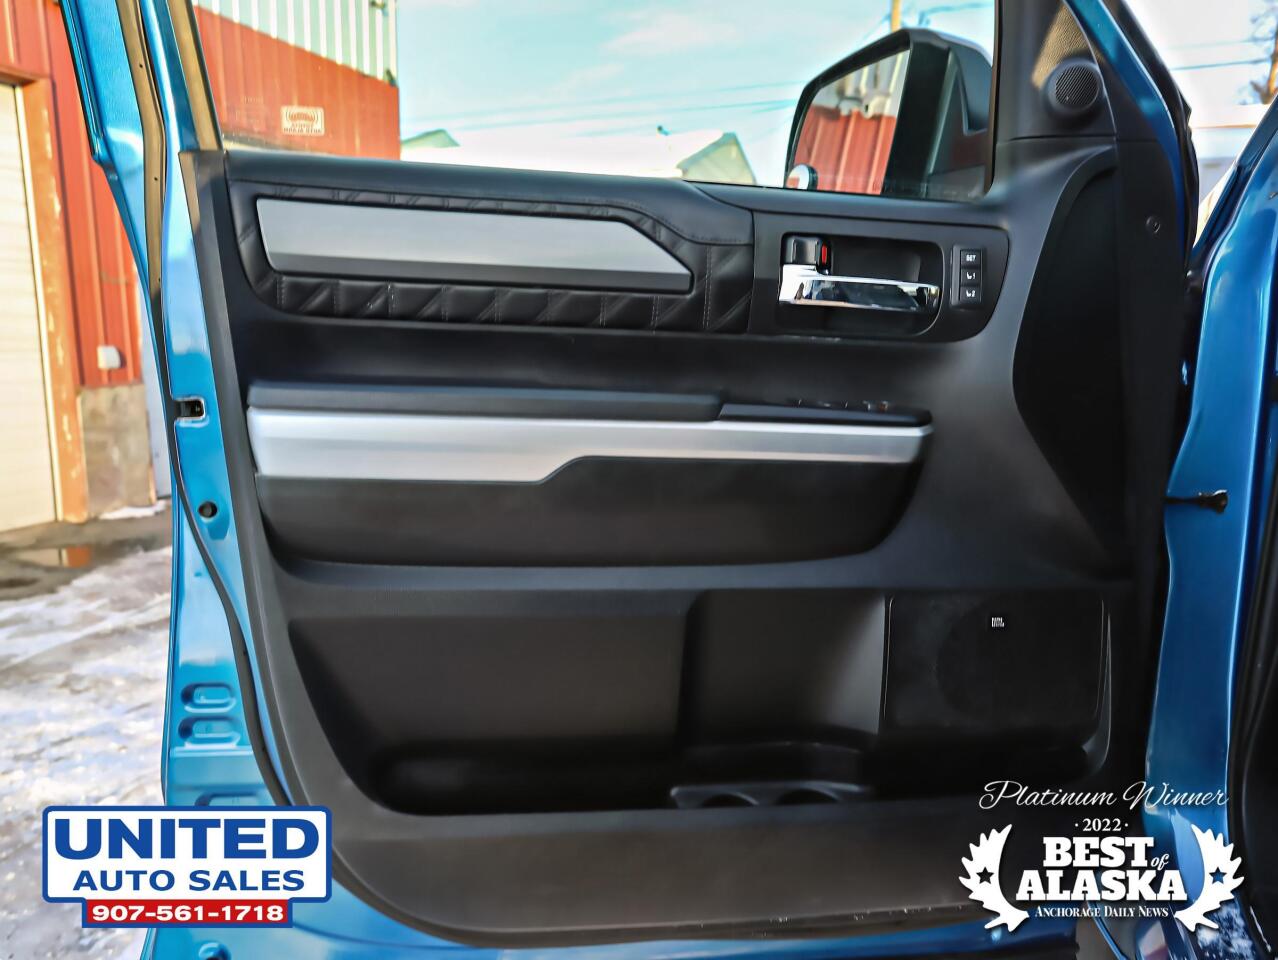 2017 Toyota Tundra Platinum 4x4 4dr CrewMax Cab Pickup SB (5.7L V8) 27